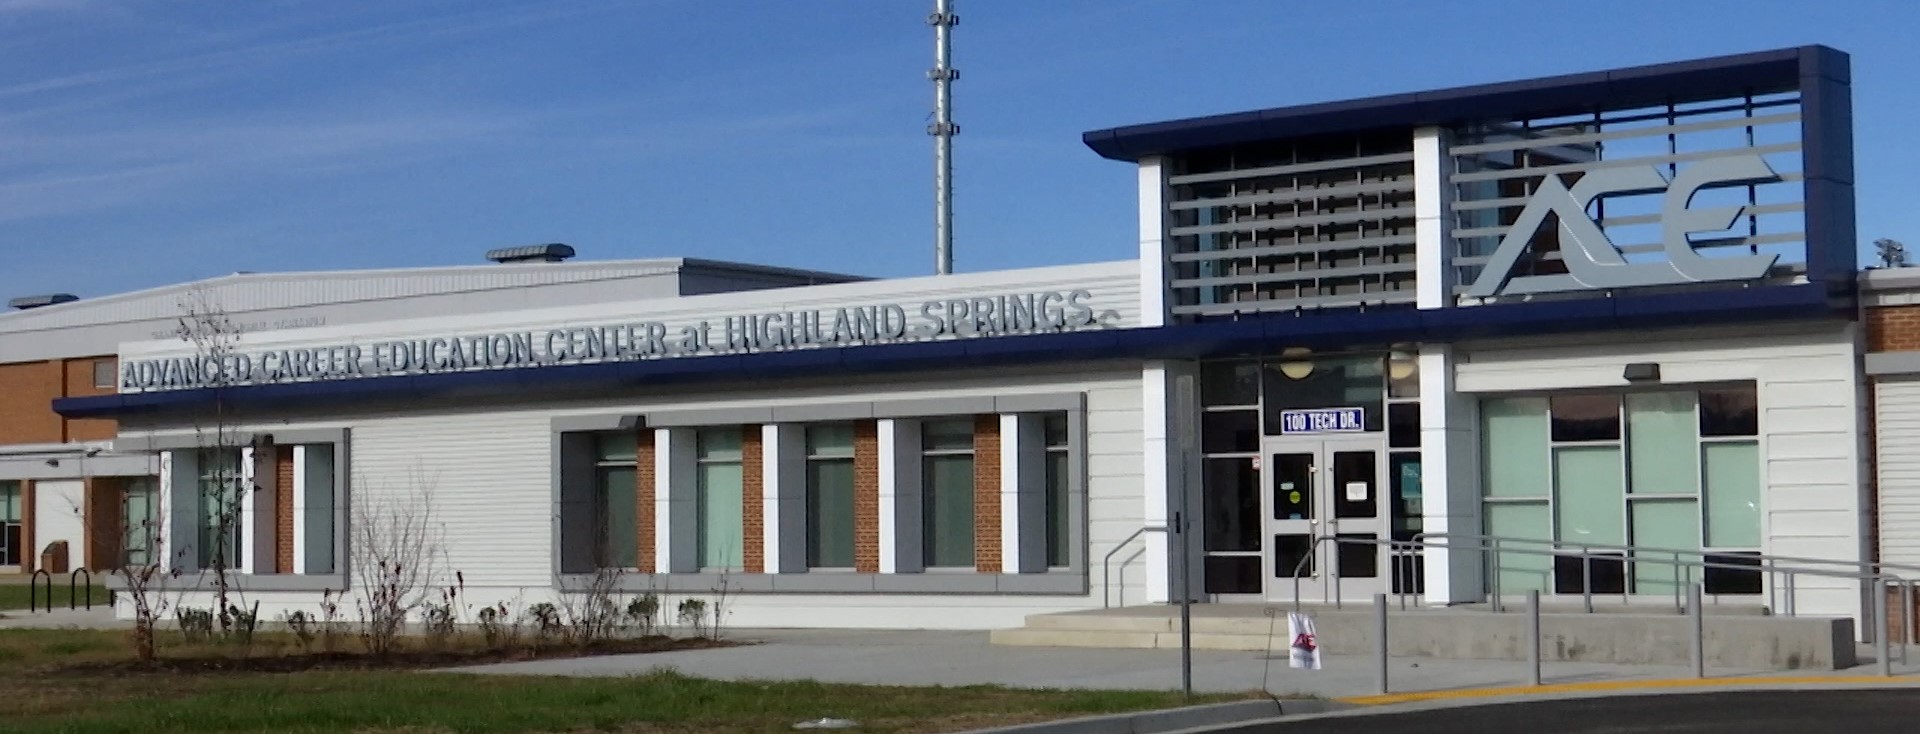 Advanced Career Education Center at Highland Spring - Main Front Entrance